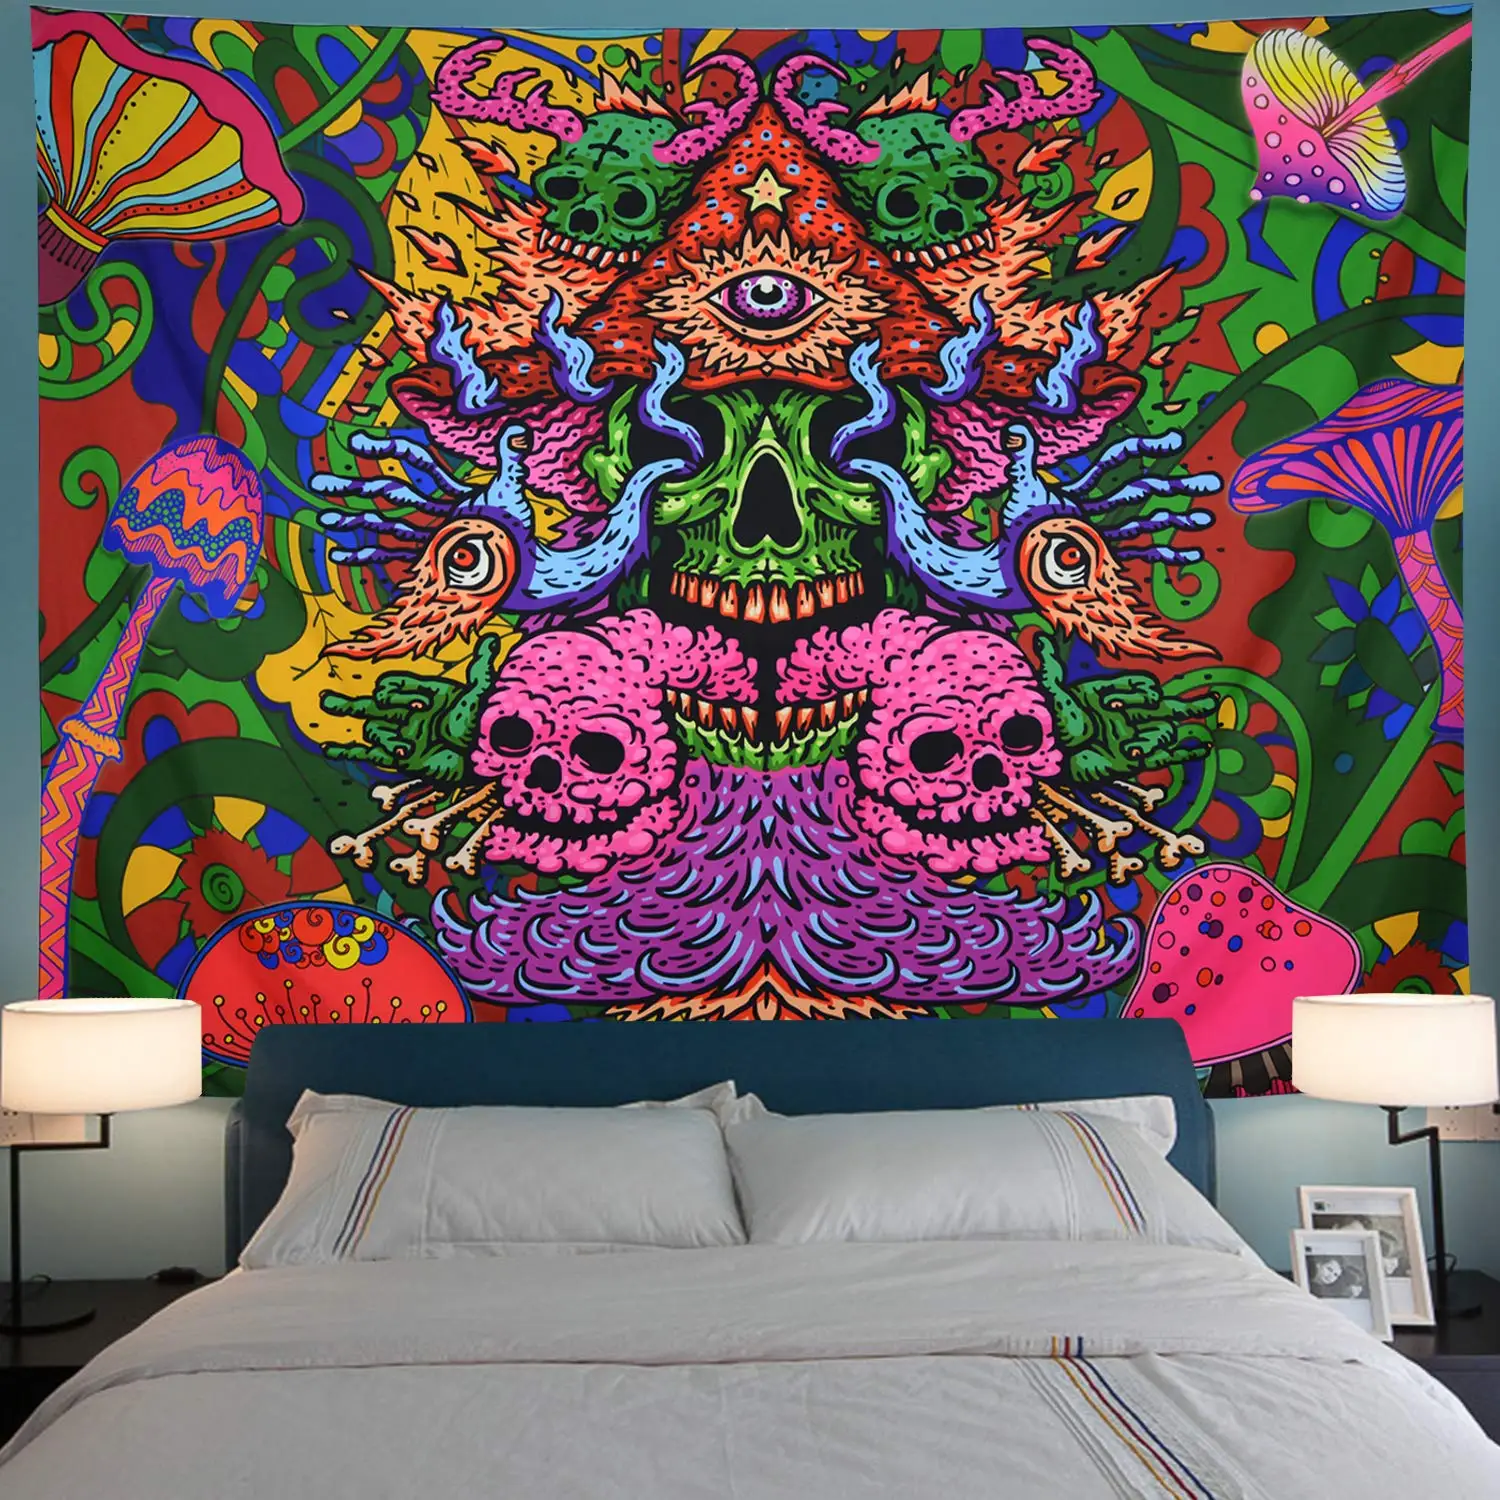 

Psychedelic Skull Flower Tapestry Fantasy Skeleton Wall Hanging Boho Hippie Tapestries Mushroom Wall Art for Dorm Bedroom Decor